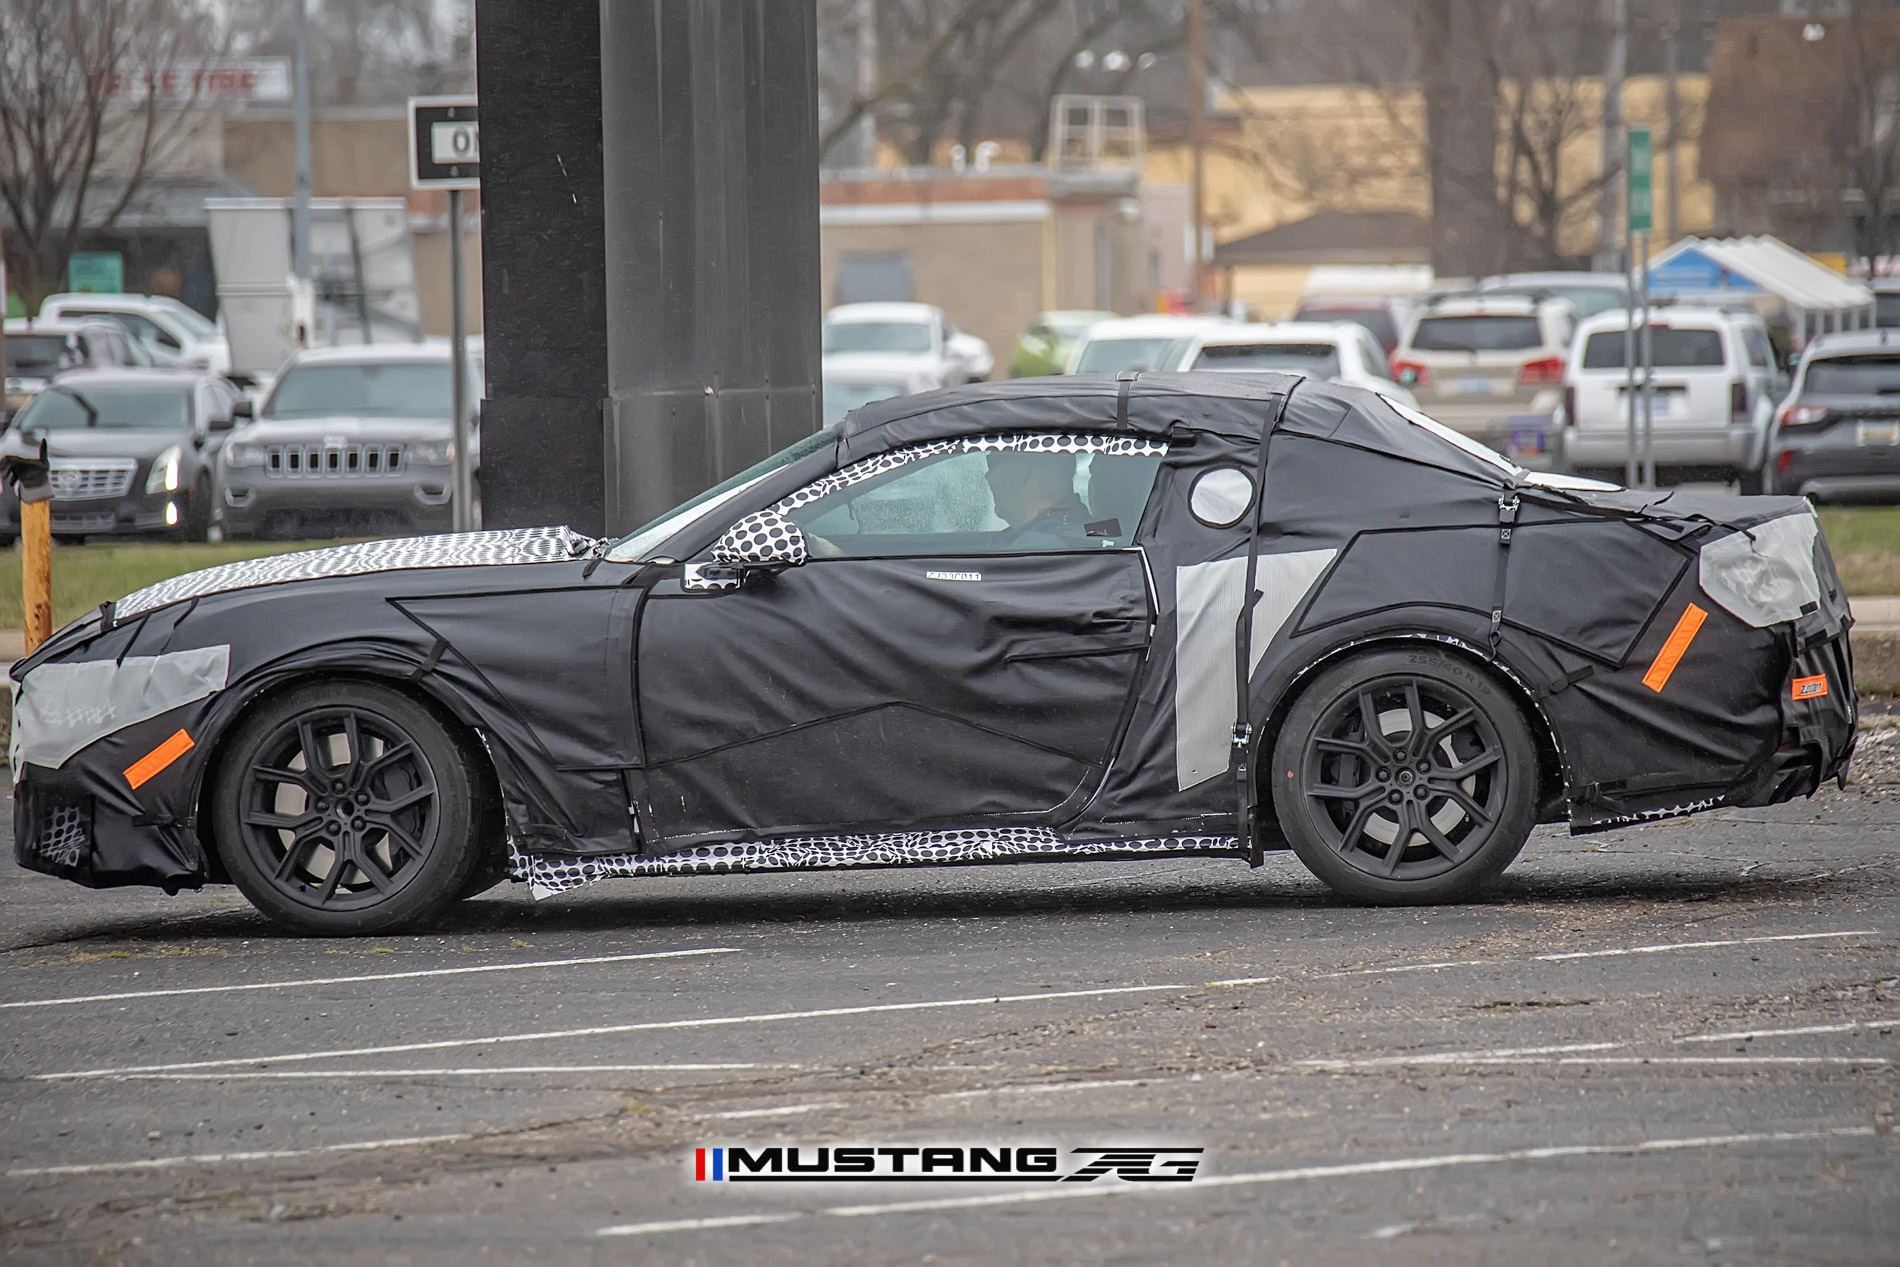 S650 Mustang S650 Mustang INTERIOR First Look Spyshots! + More Exterior Shots 1649697164619